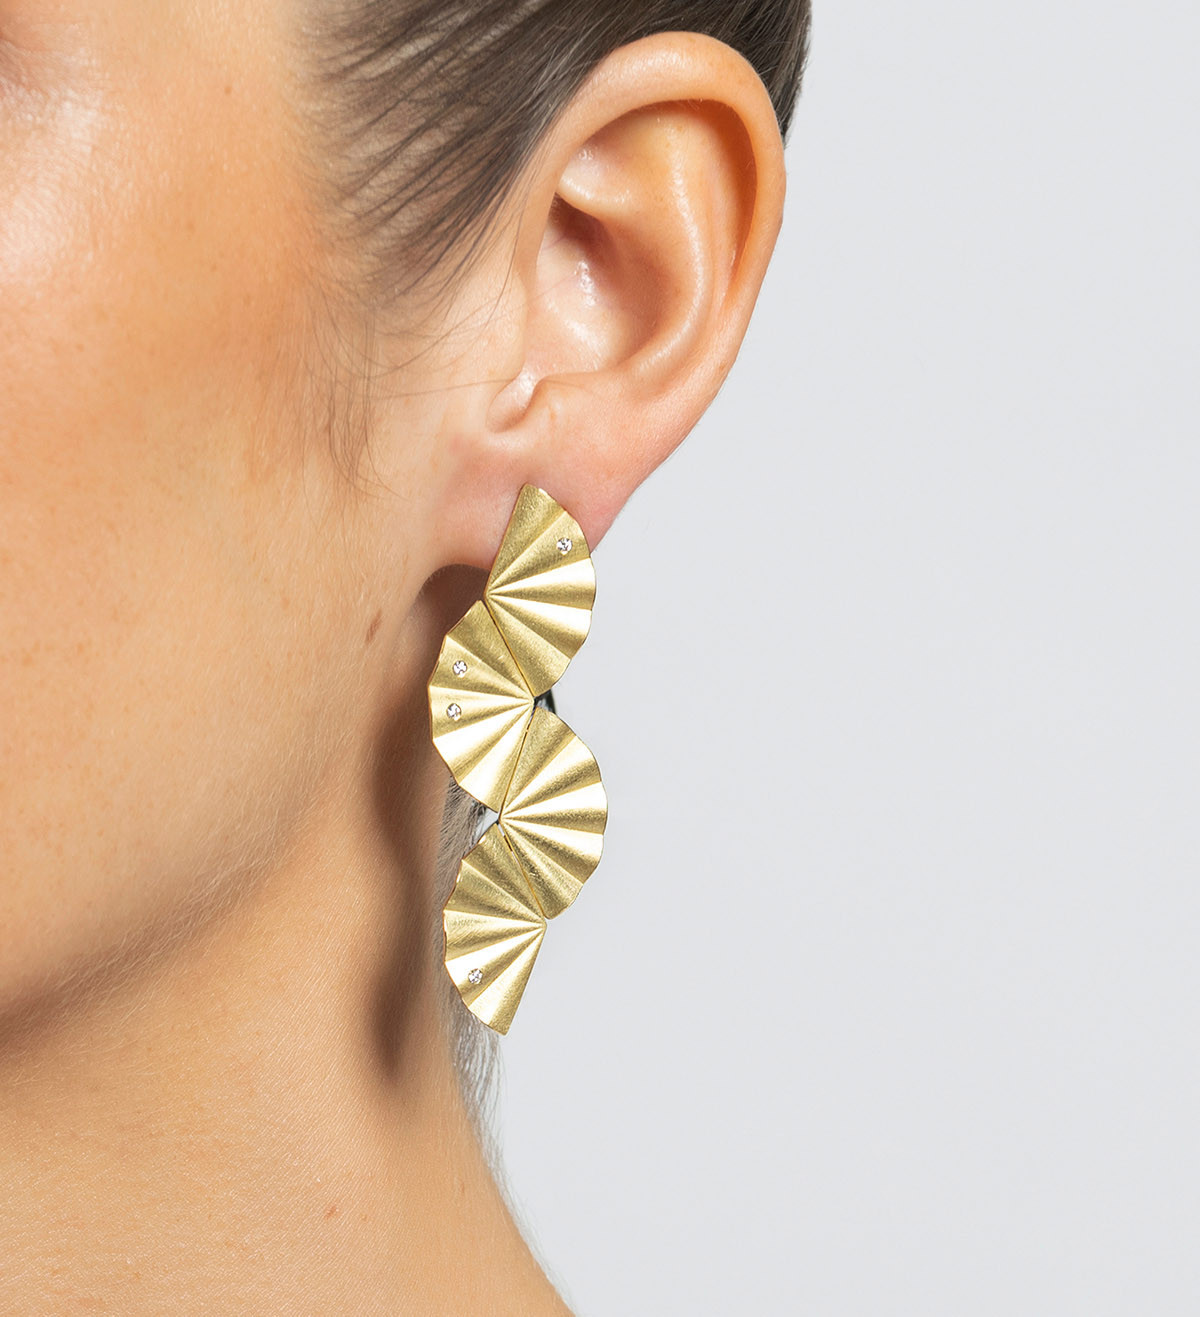 18k gold earrings Maiko with diamonds 0,12ct